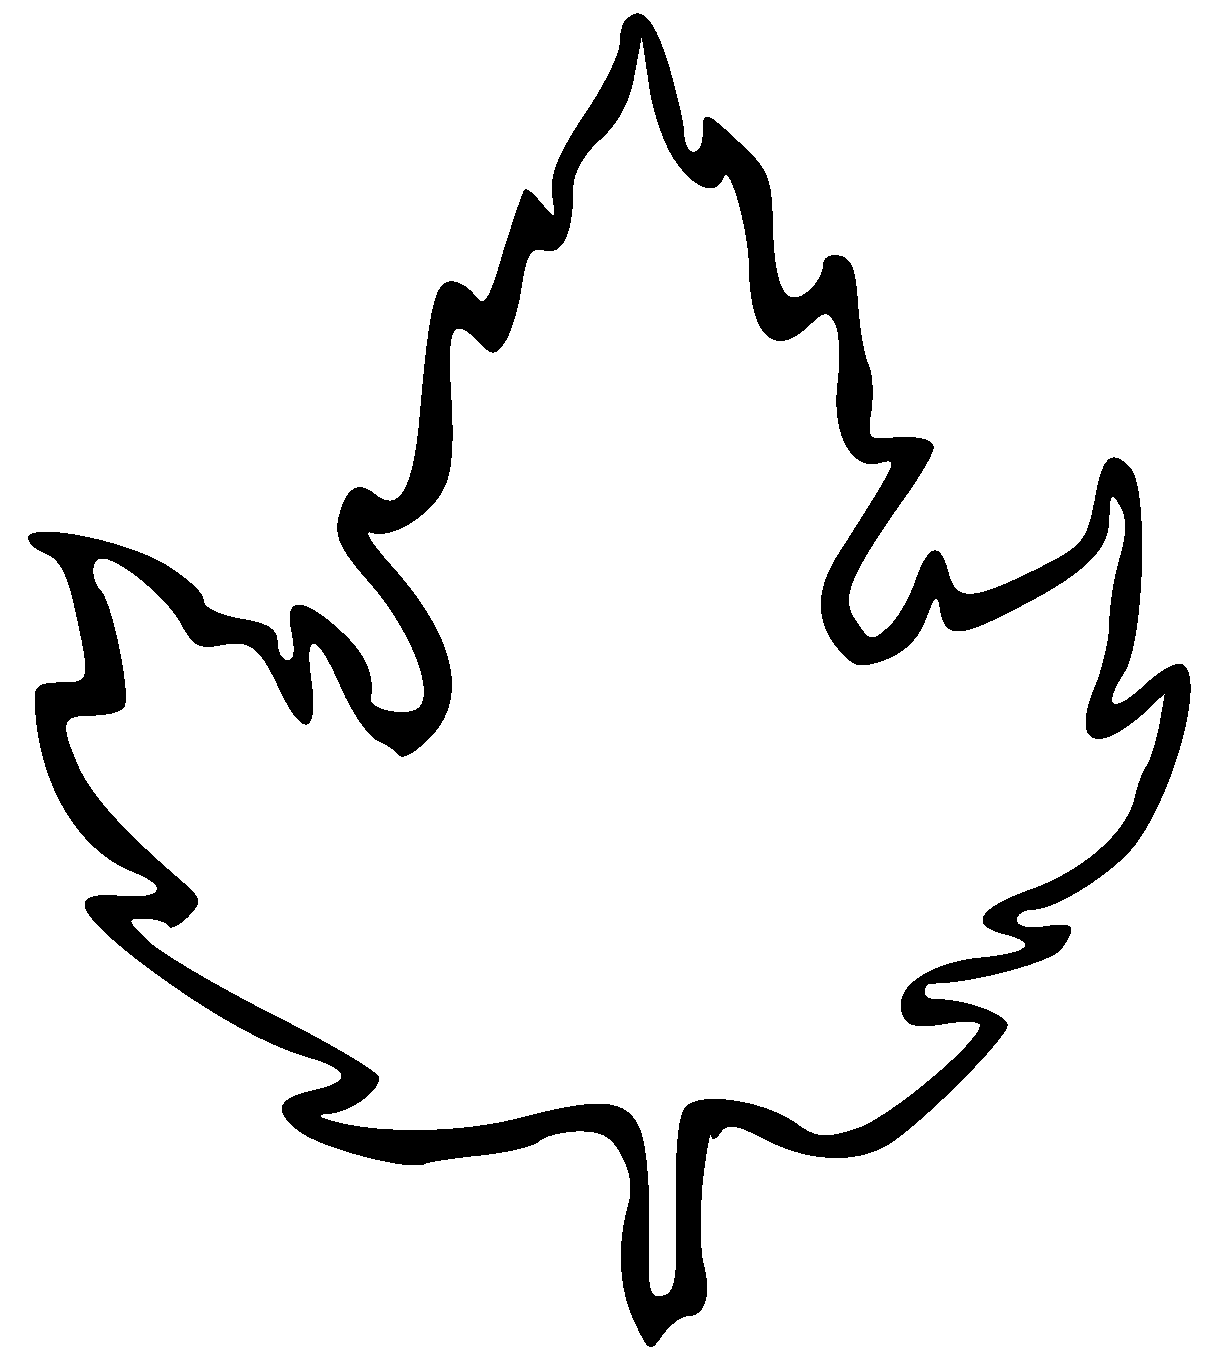 Leaf - Traceable Heraldic Art